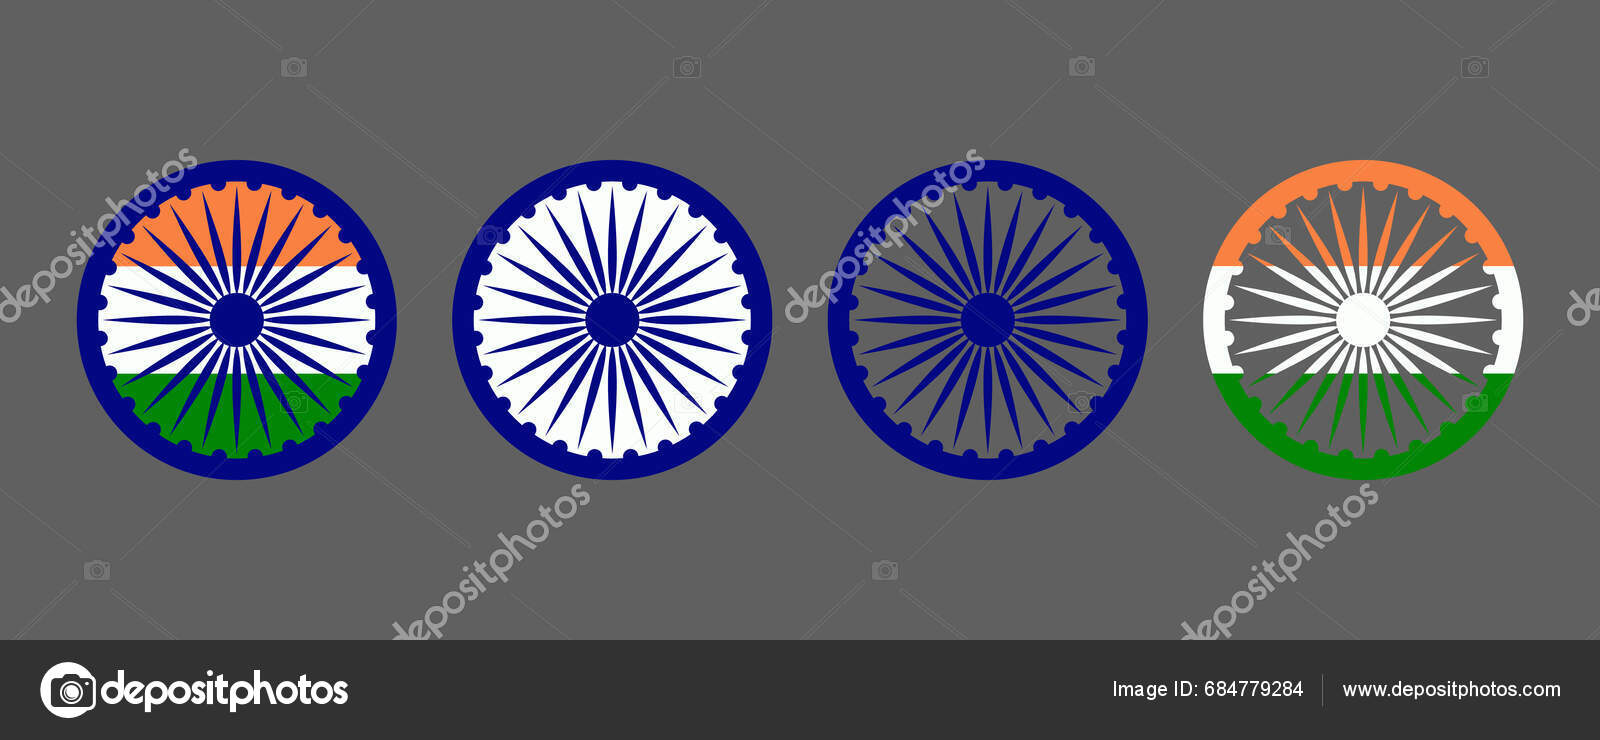 Ashoka Chakra Indian With Flags Vector Illustration Design Royalty Free  SVG, Cliparts, Vectors, and Stock Illustration. Image 129824475.